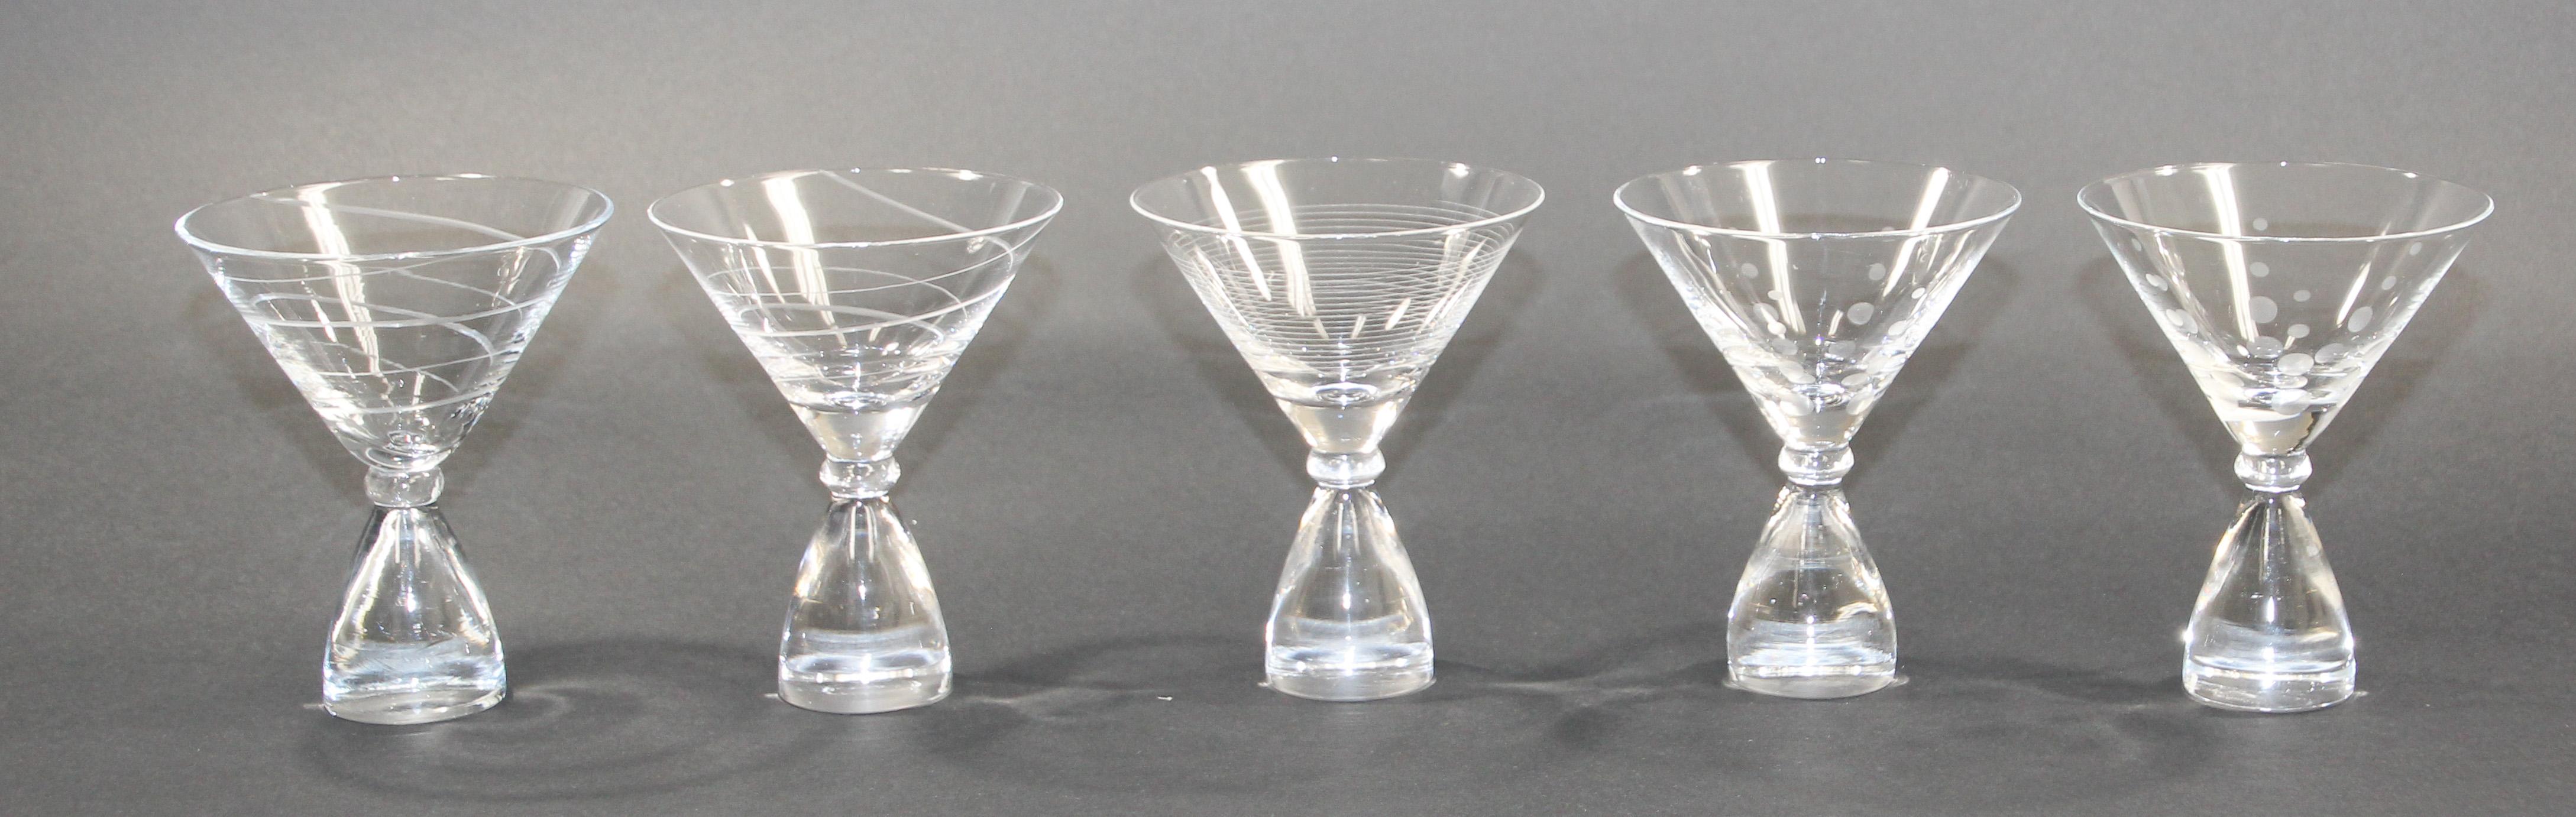 Vintage Martini Crystal Glasses Set of 5 8